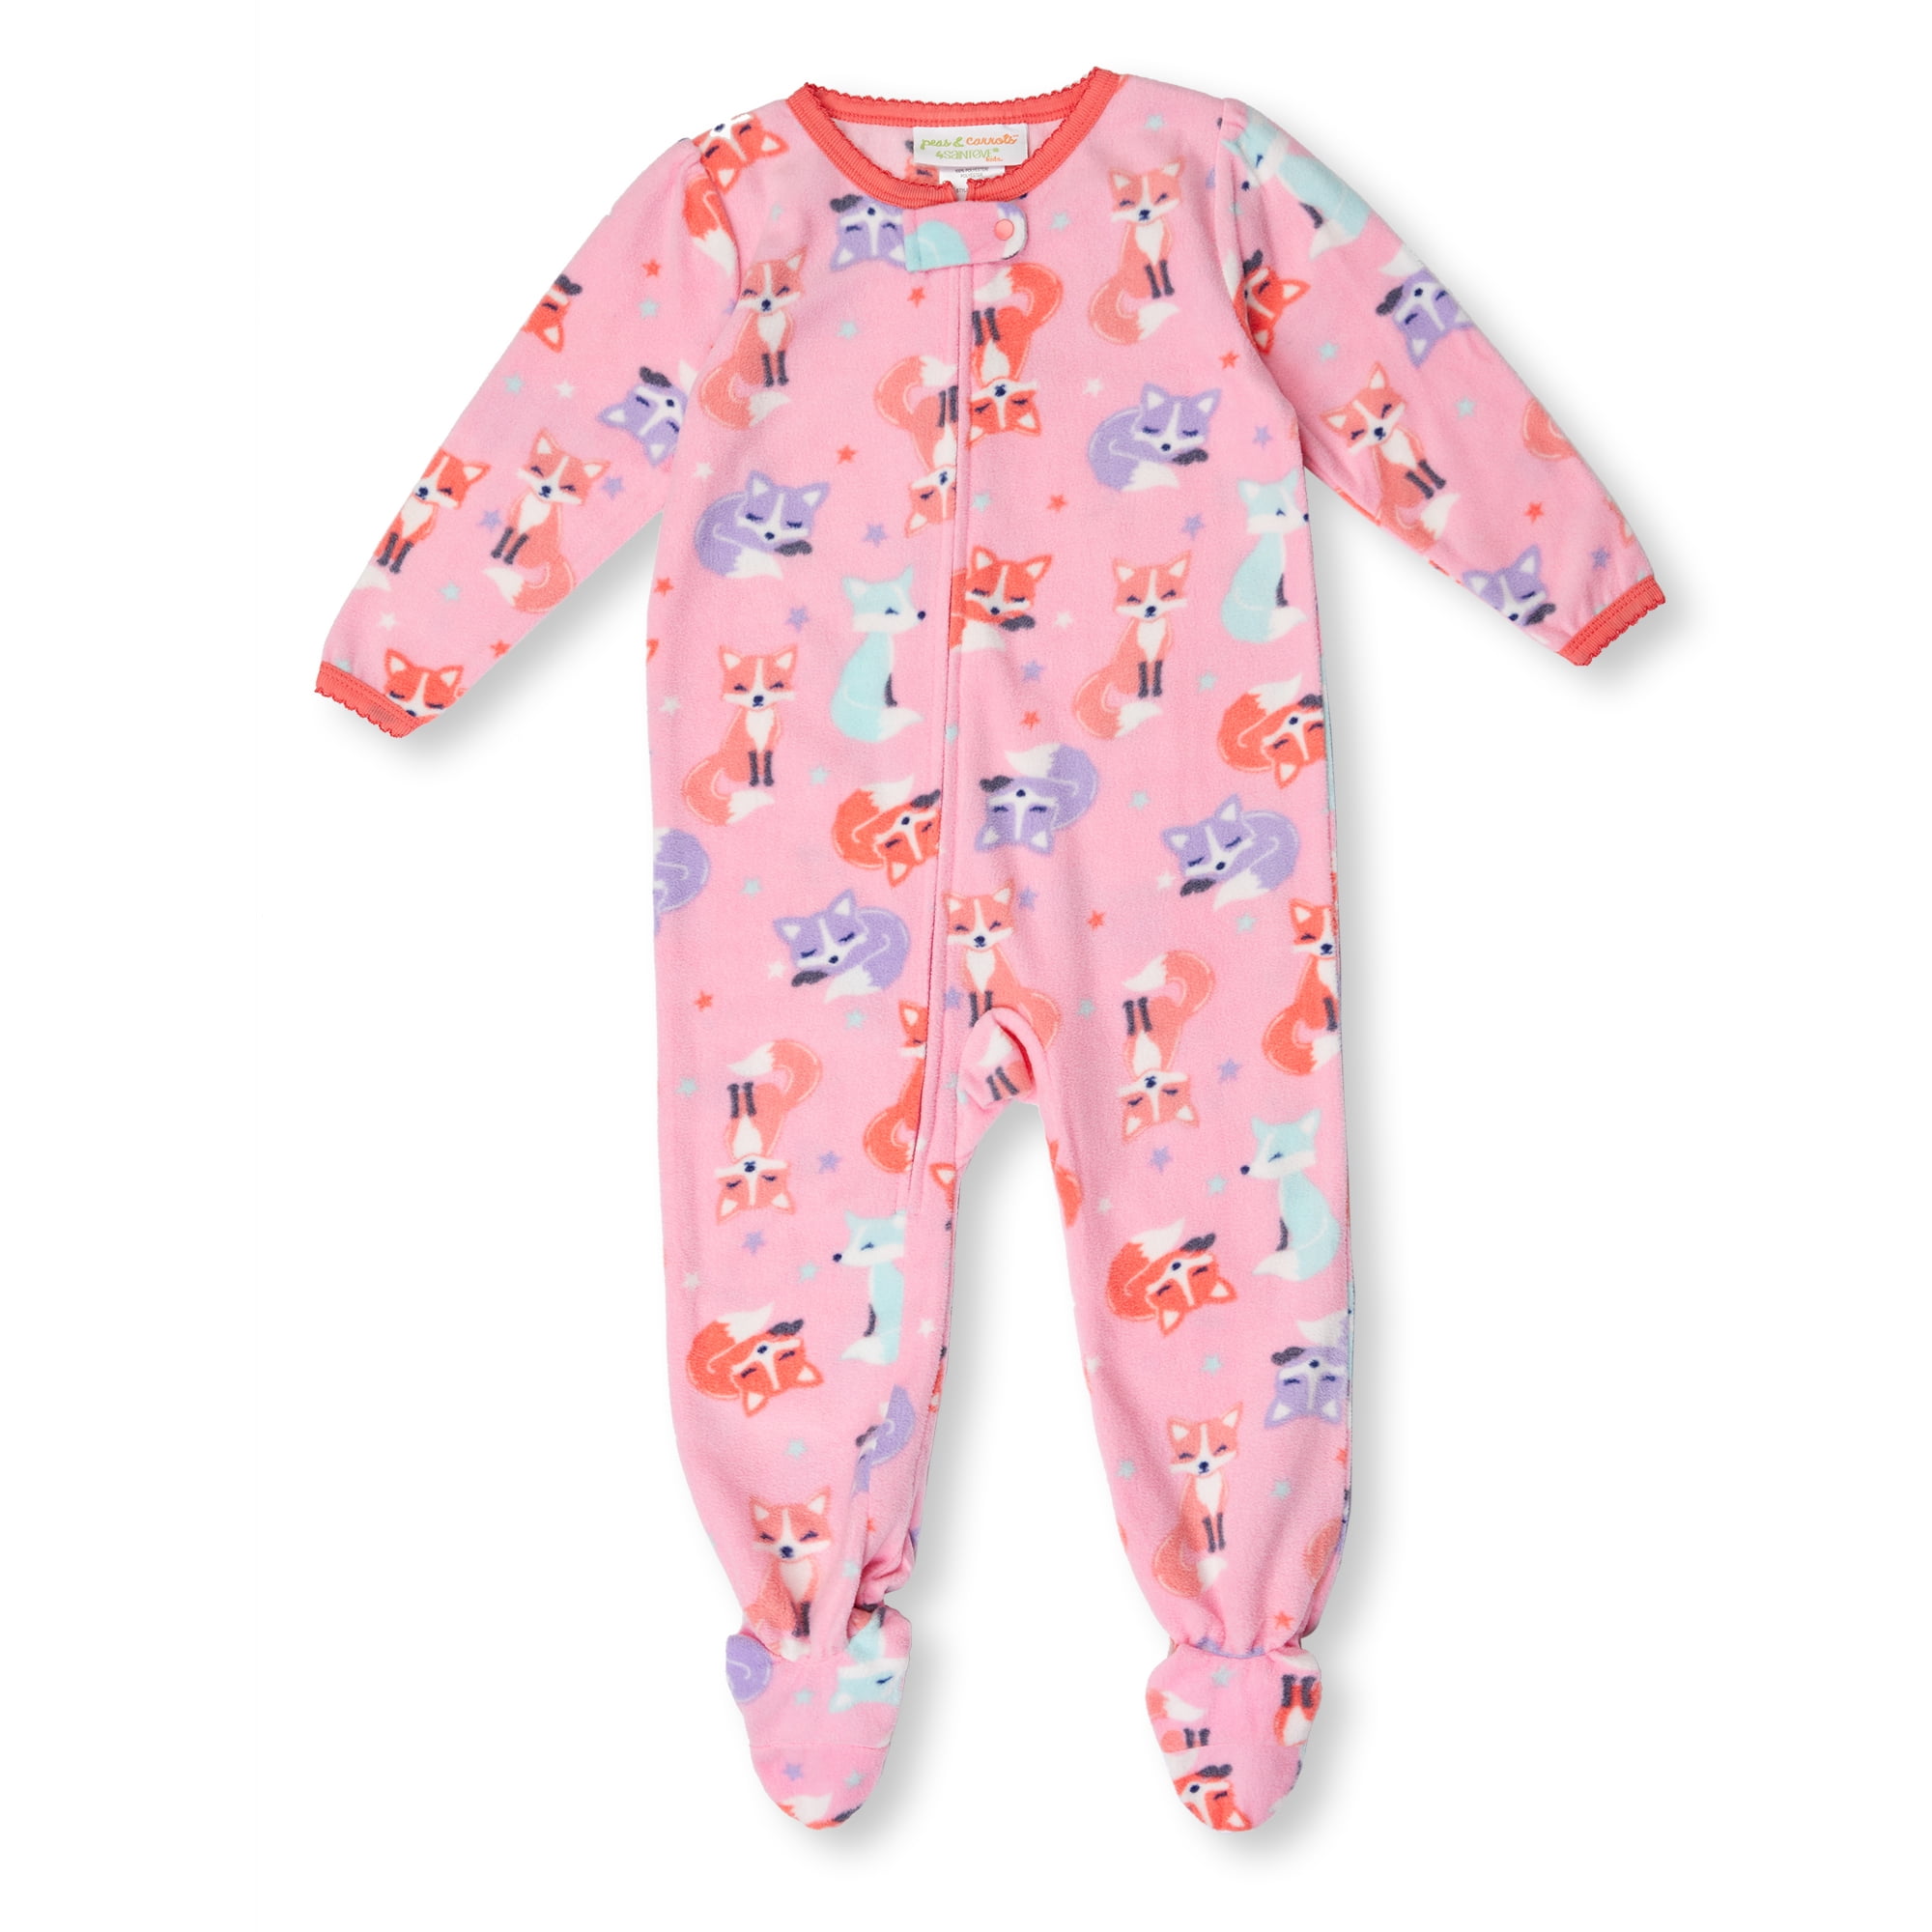 Peas & Carrots Toddler Girls Pink Fox Fleece Long Sleeved Footed Pajamas